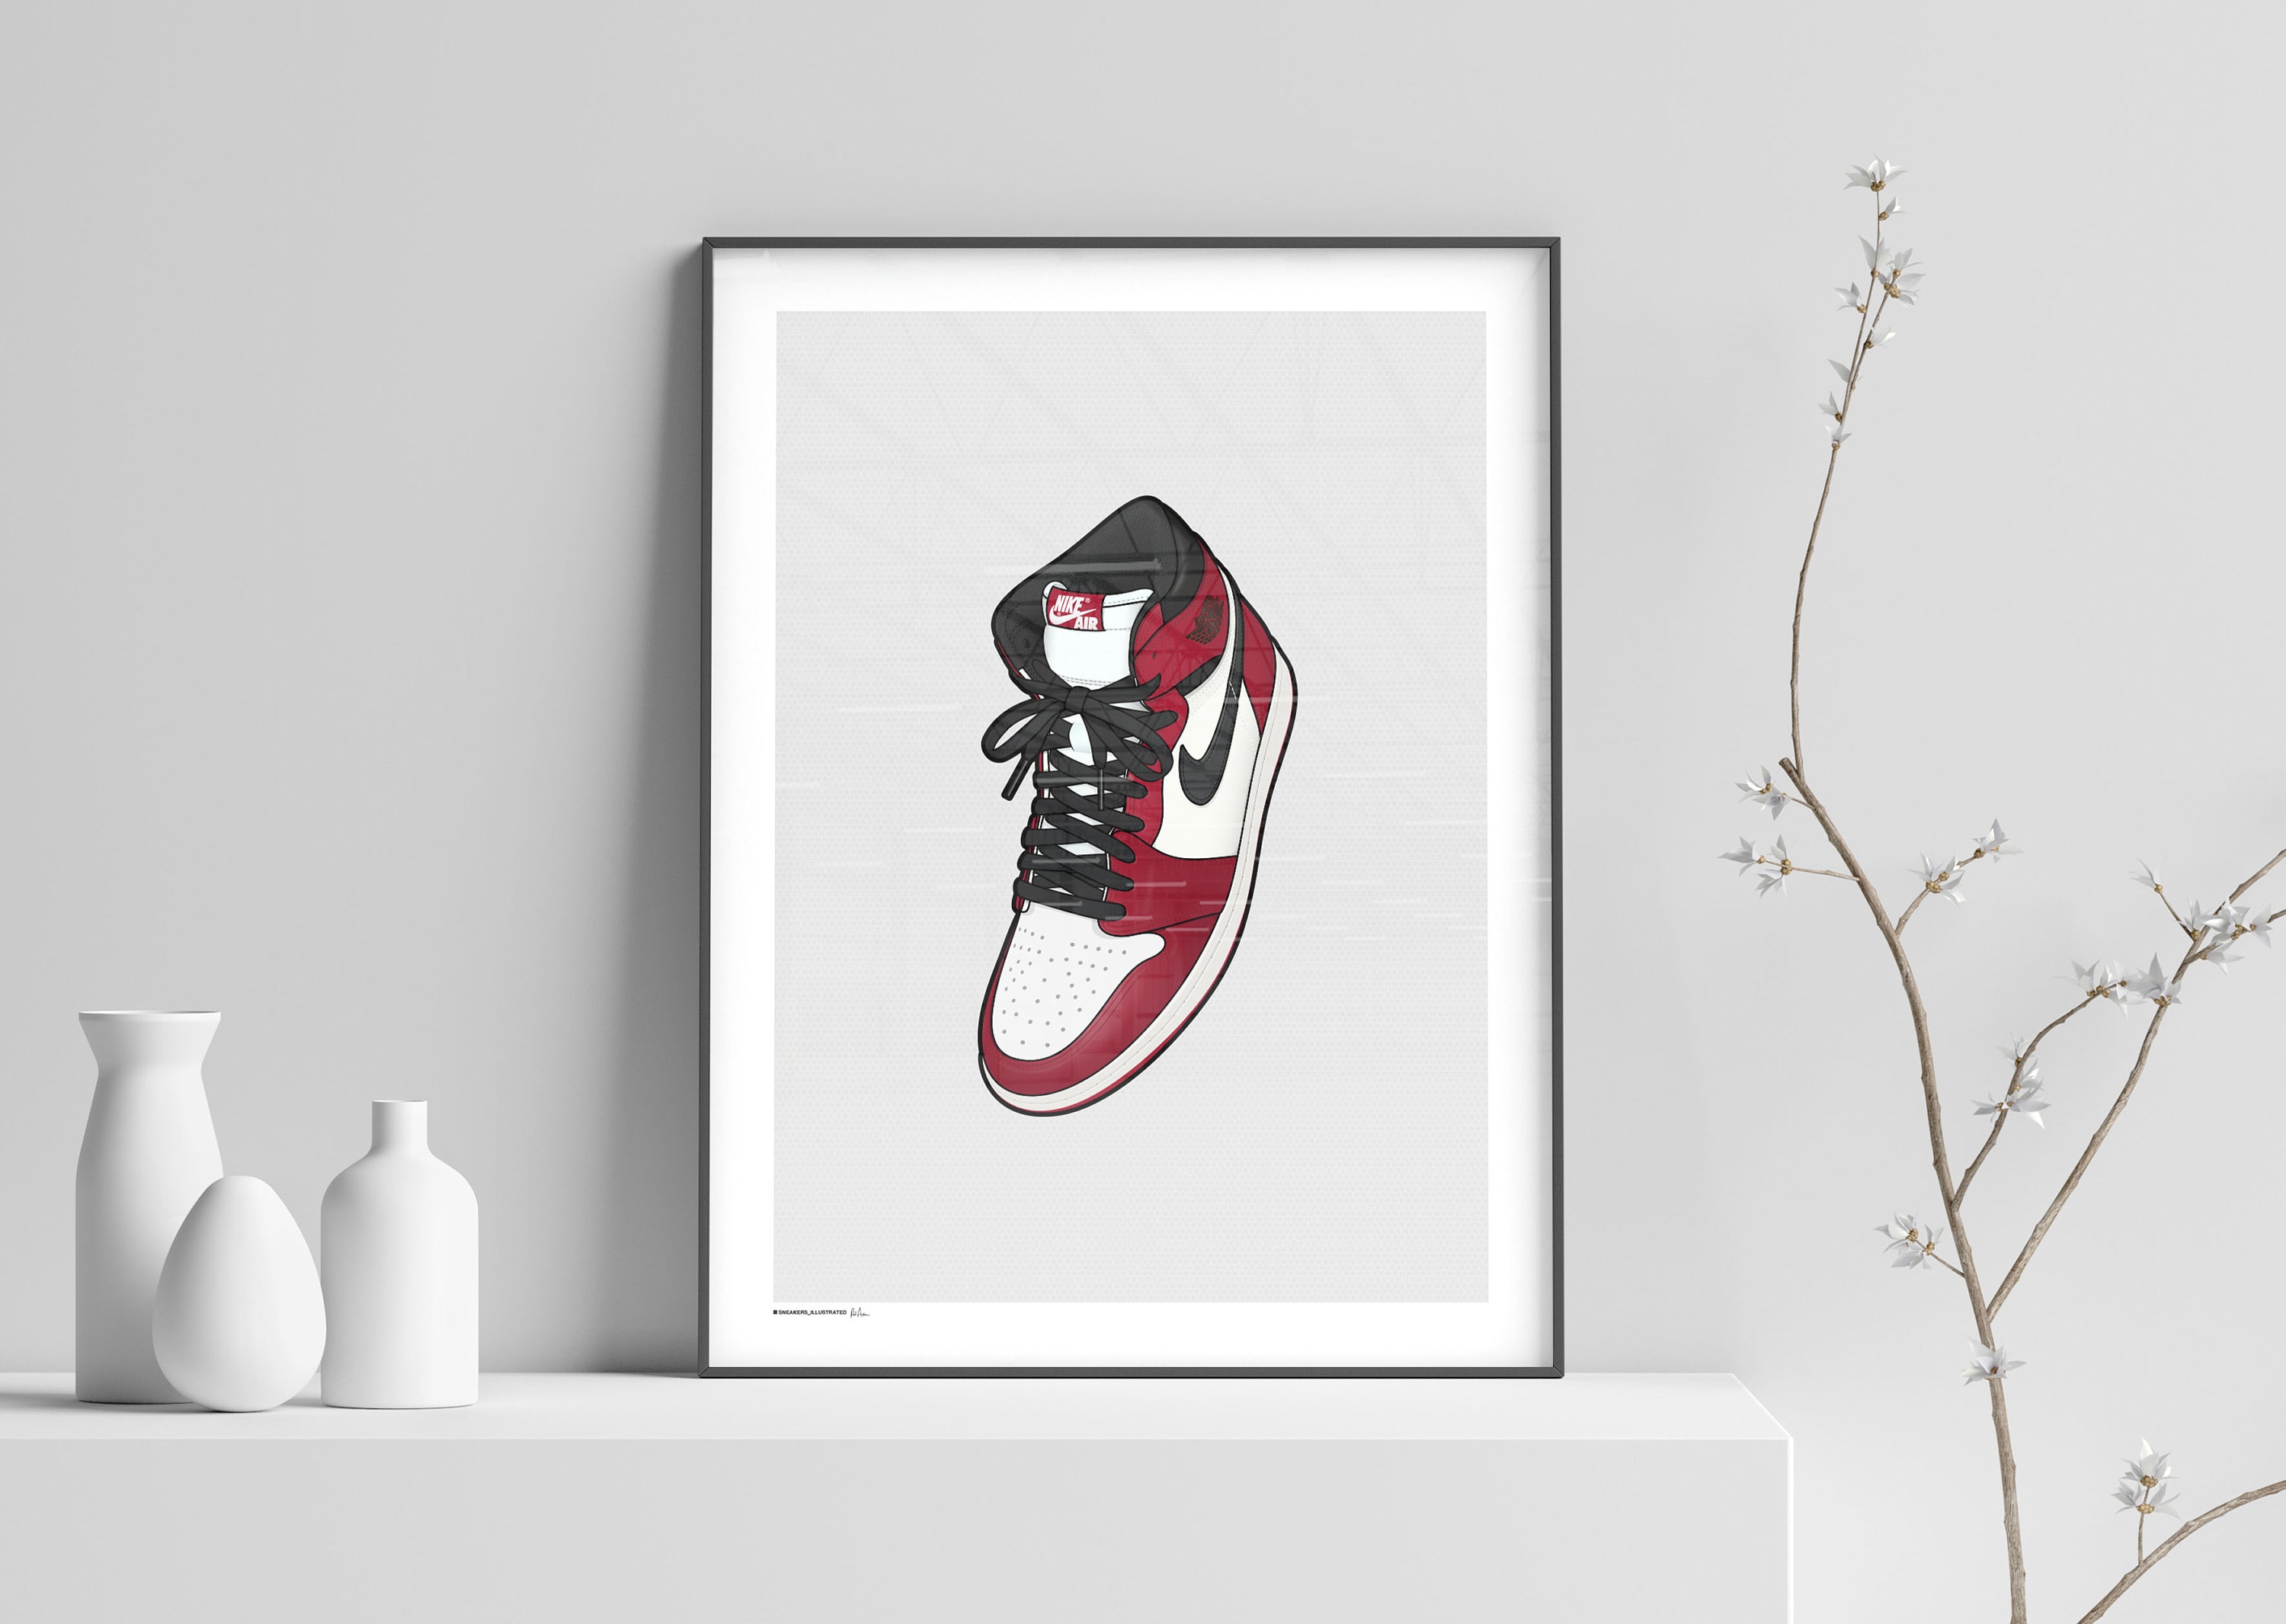 Michael Jordan Nike Air Jordan 1 1985 Advertisement Mini Poster Limited  Signature Edition Custom Frame